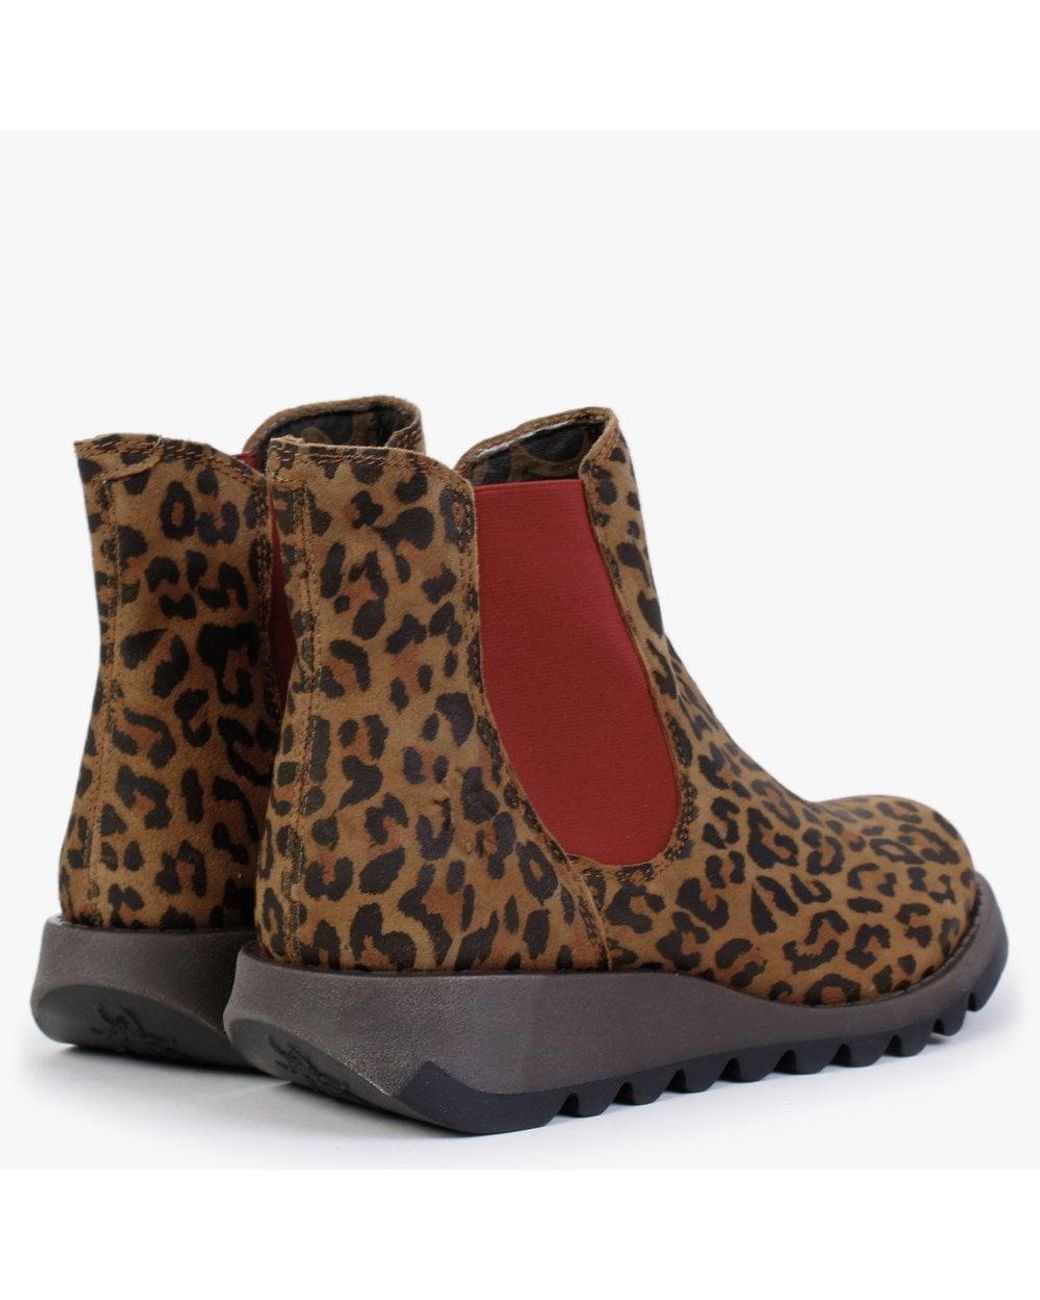 Fly London Yoss Tan Cheetah Leather Womens Slip On Chelsea Wedge Boot BNIB 